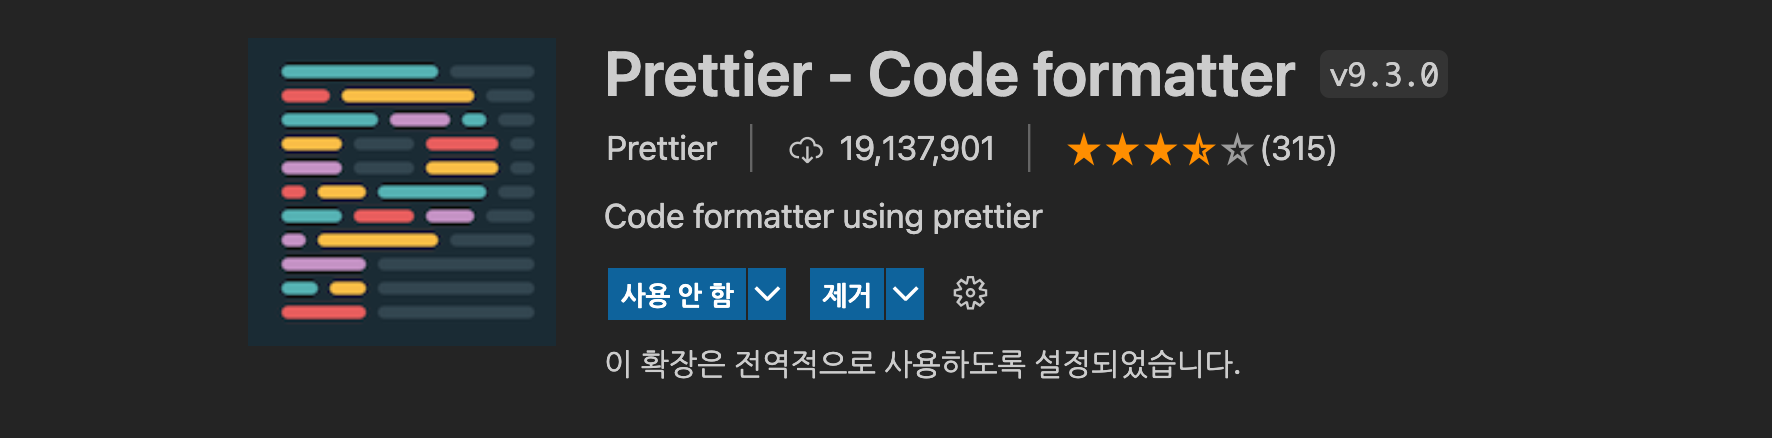 Prettier_Code_formatter